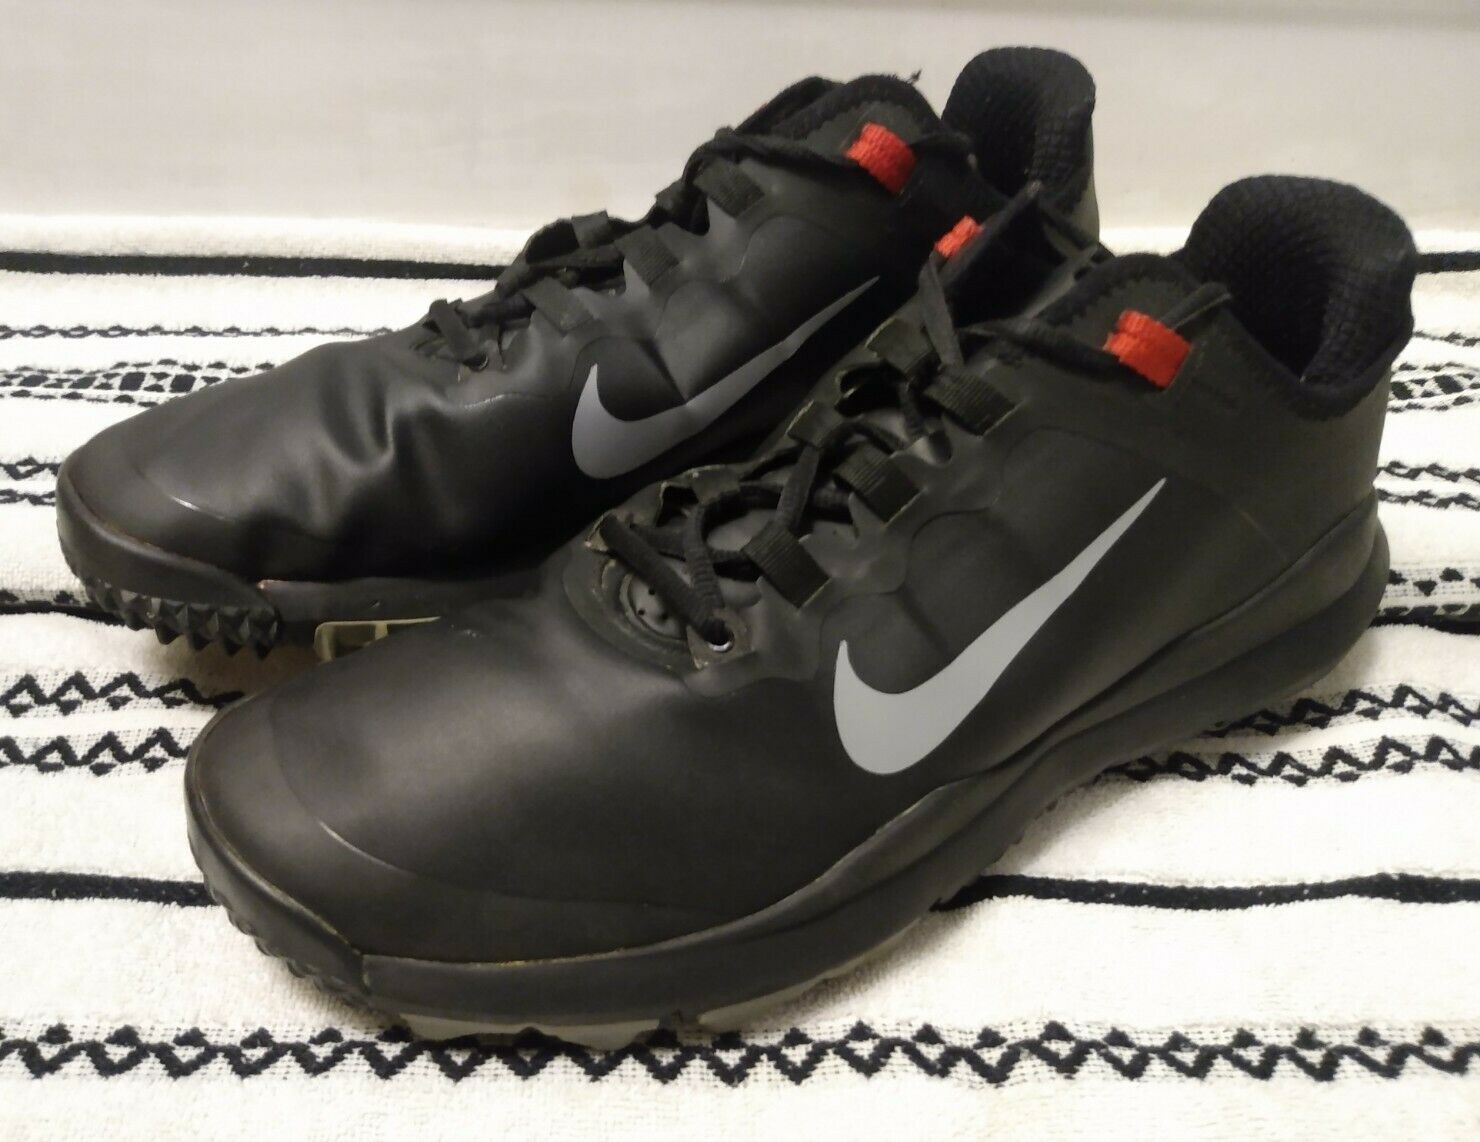 Nike Tiger Woods TW13 Men's Black Red Golf Shoes 532622-001 Sz 12 Wide Worn 1X